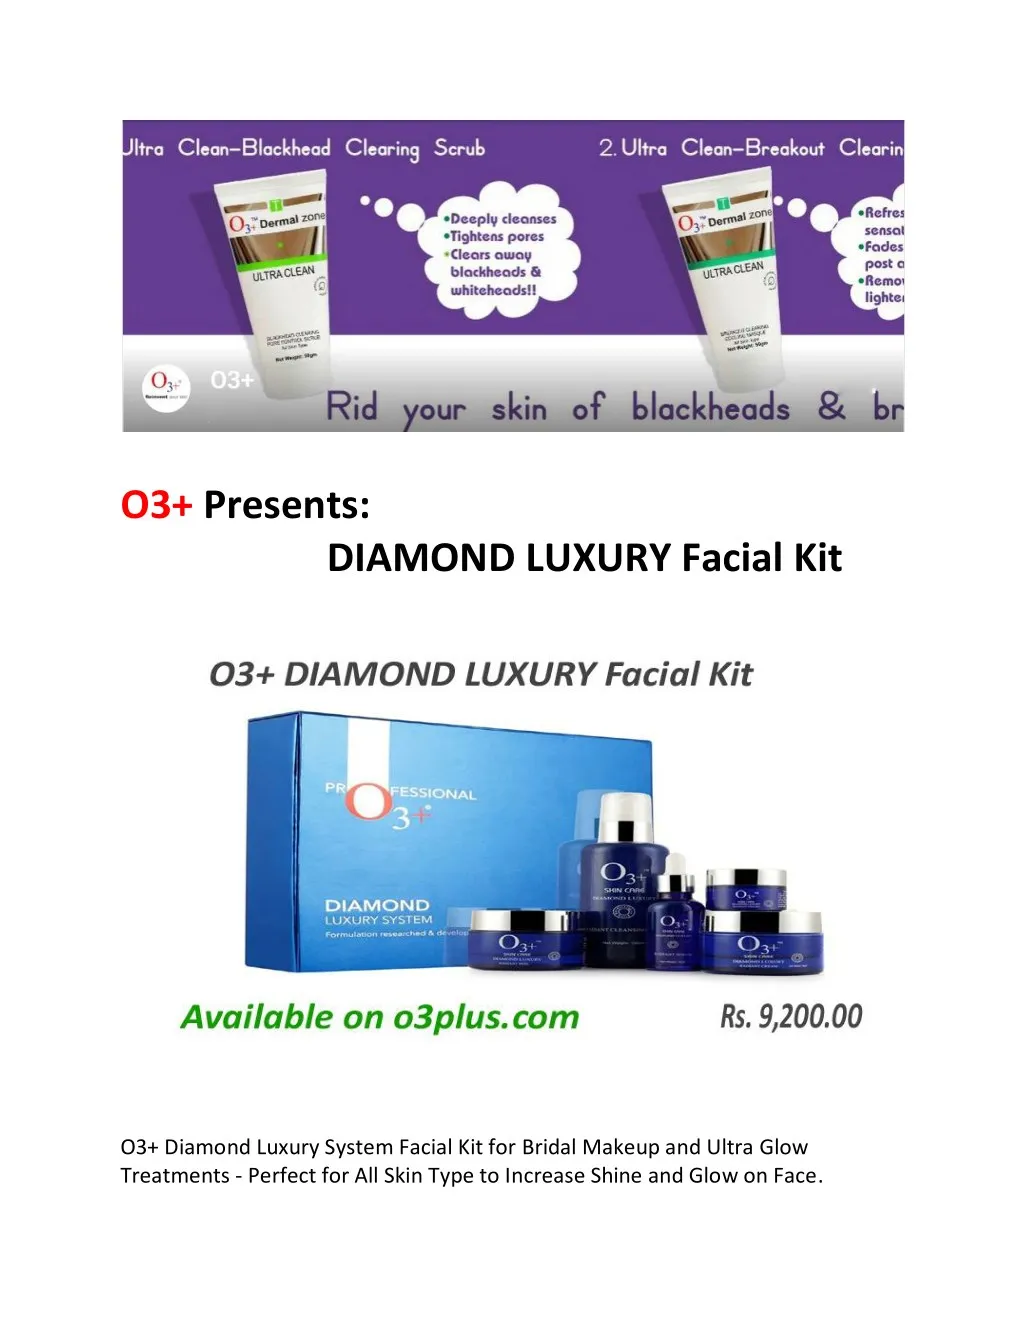 o3 presents diamond luxury facial kit